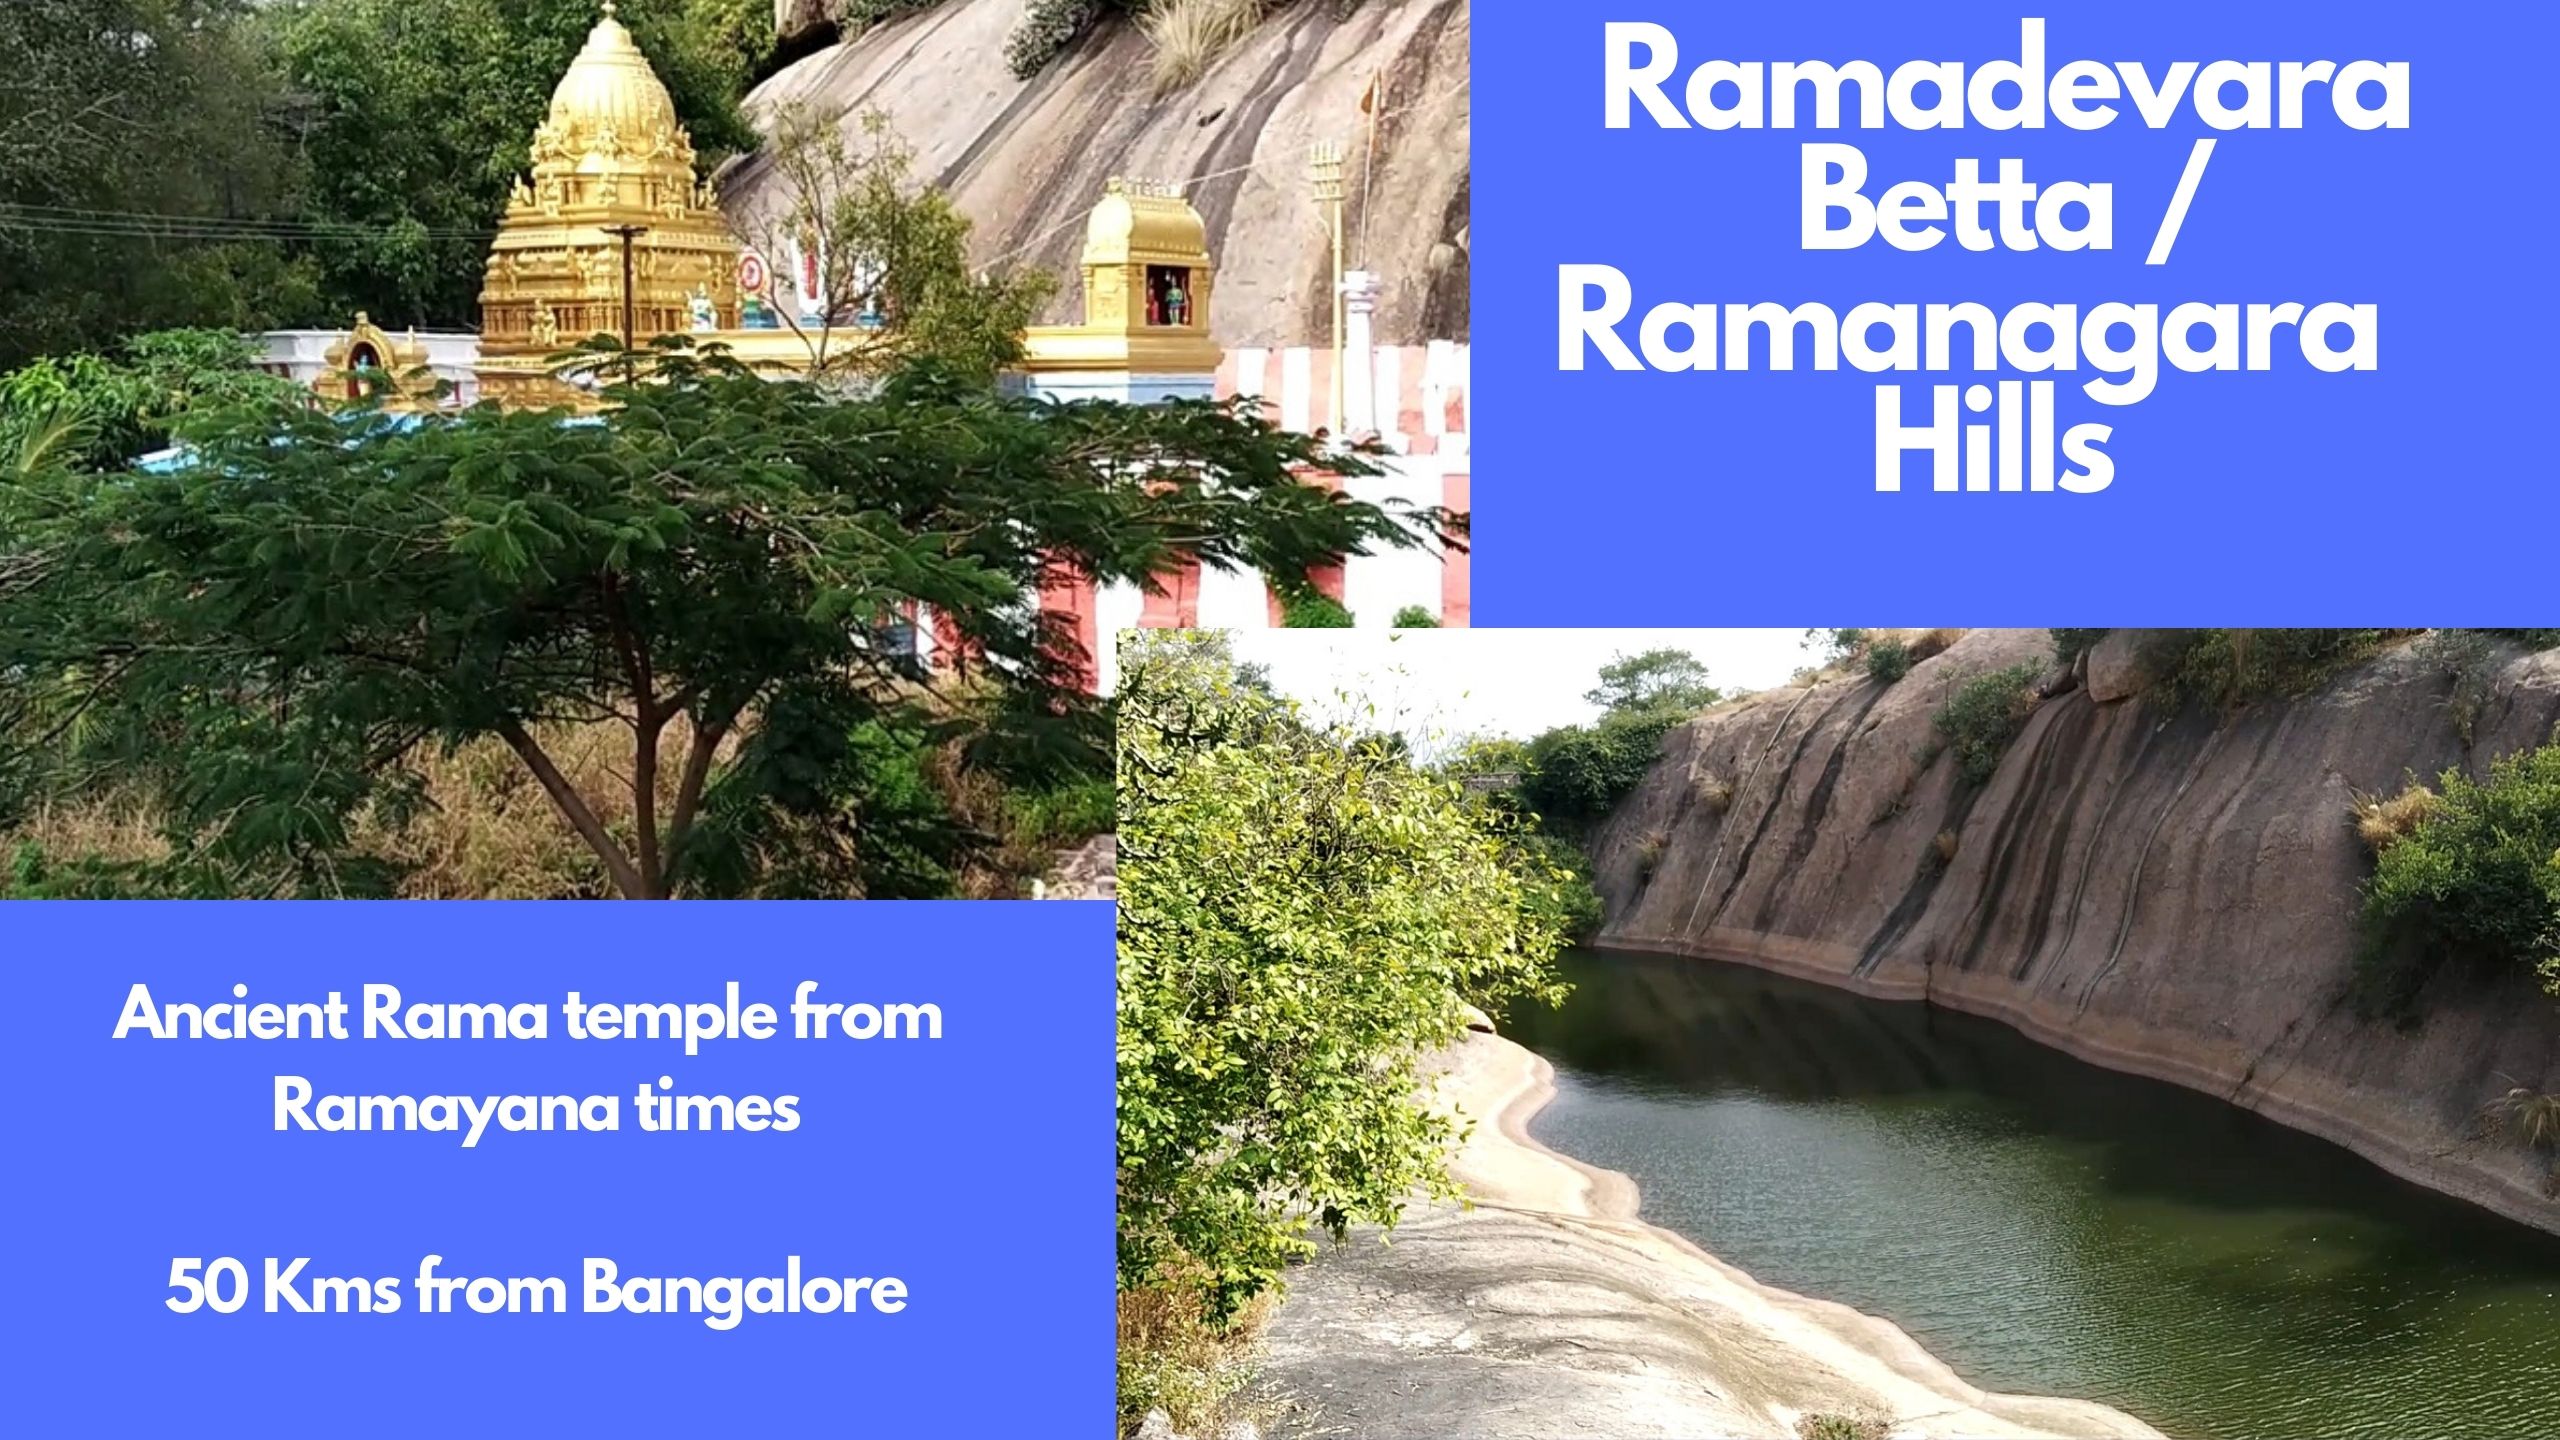 Ramadevara Betta – Ancient Rama temple from Ramayana times – Ramanagara Hills